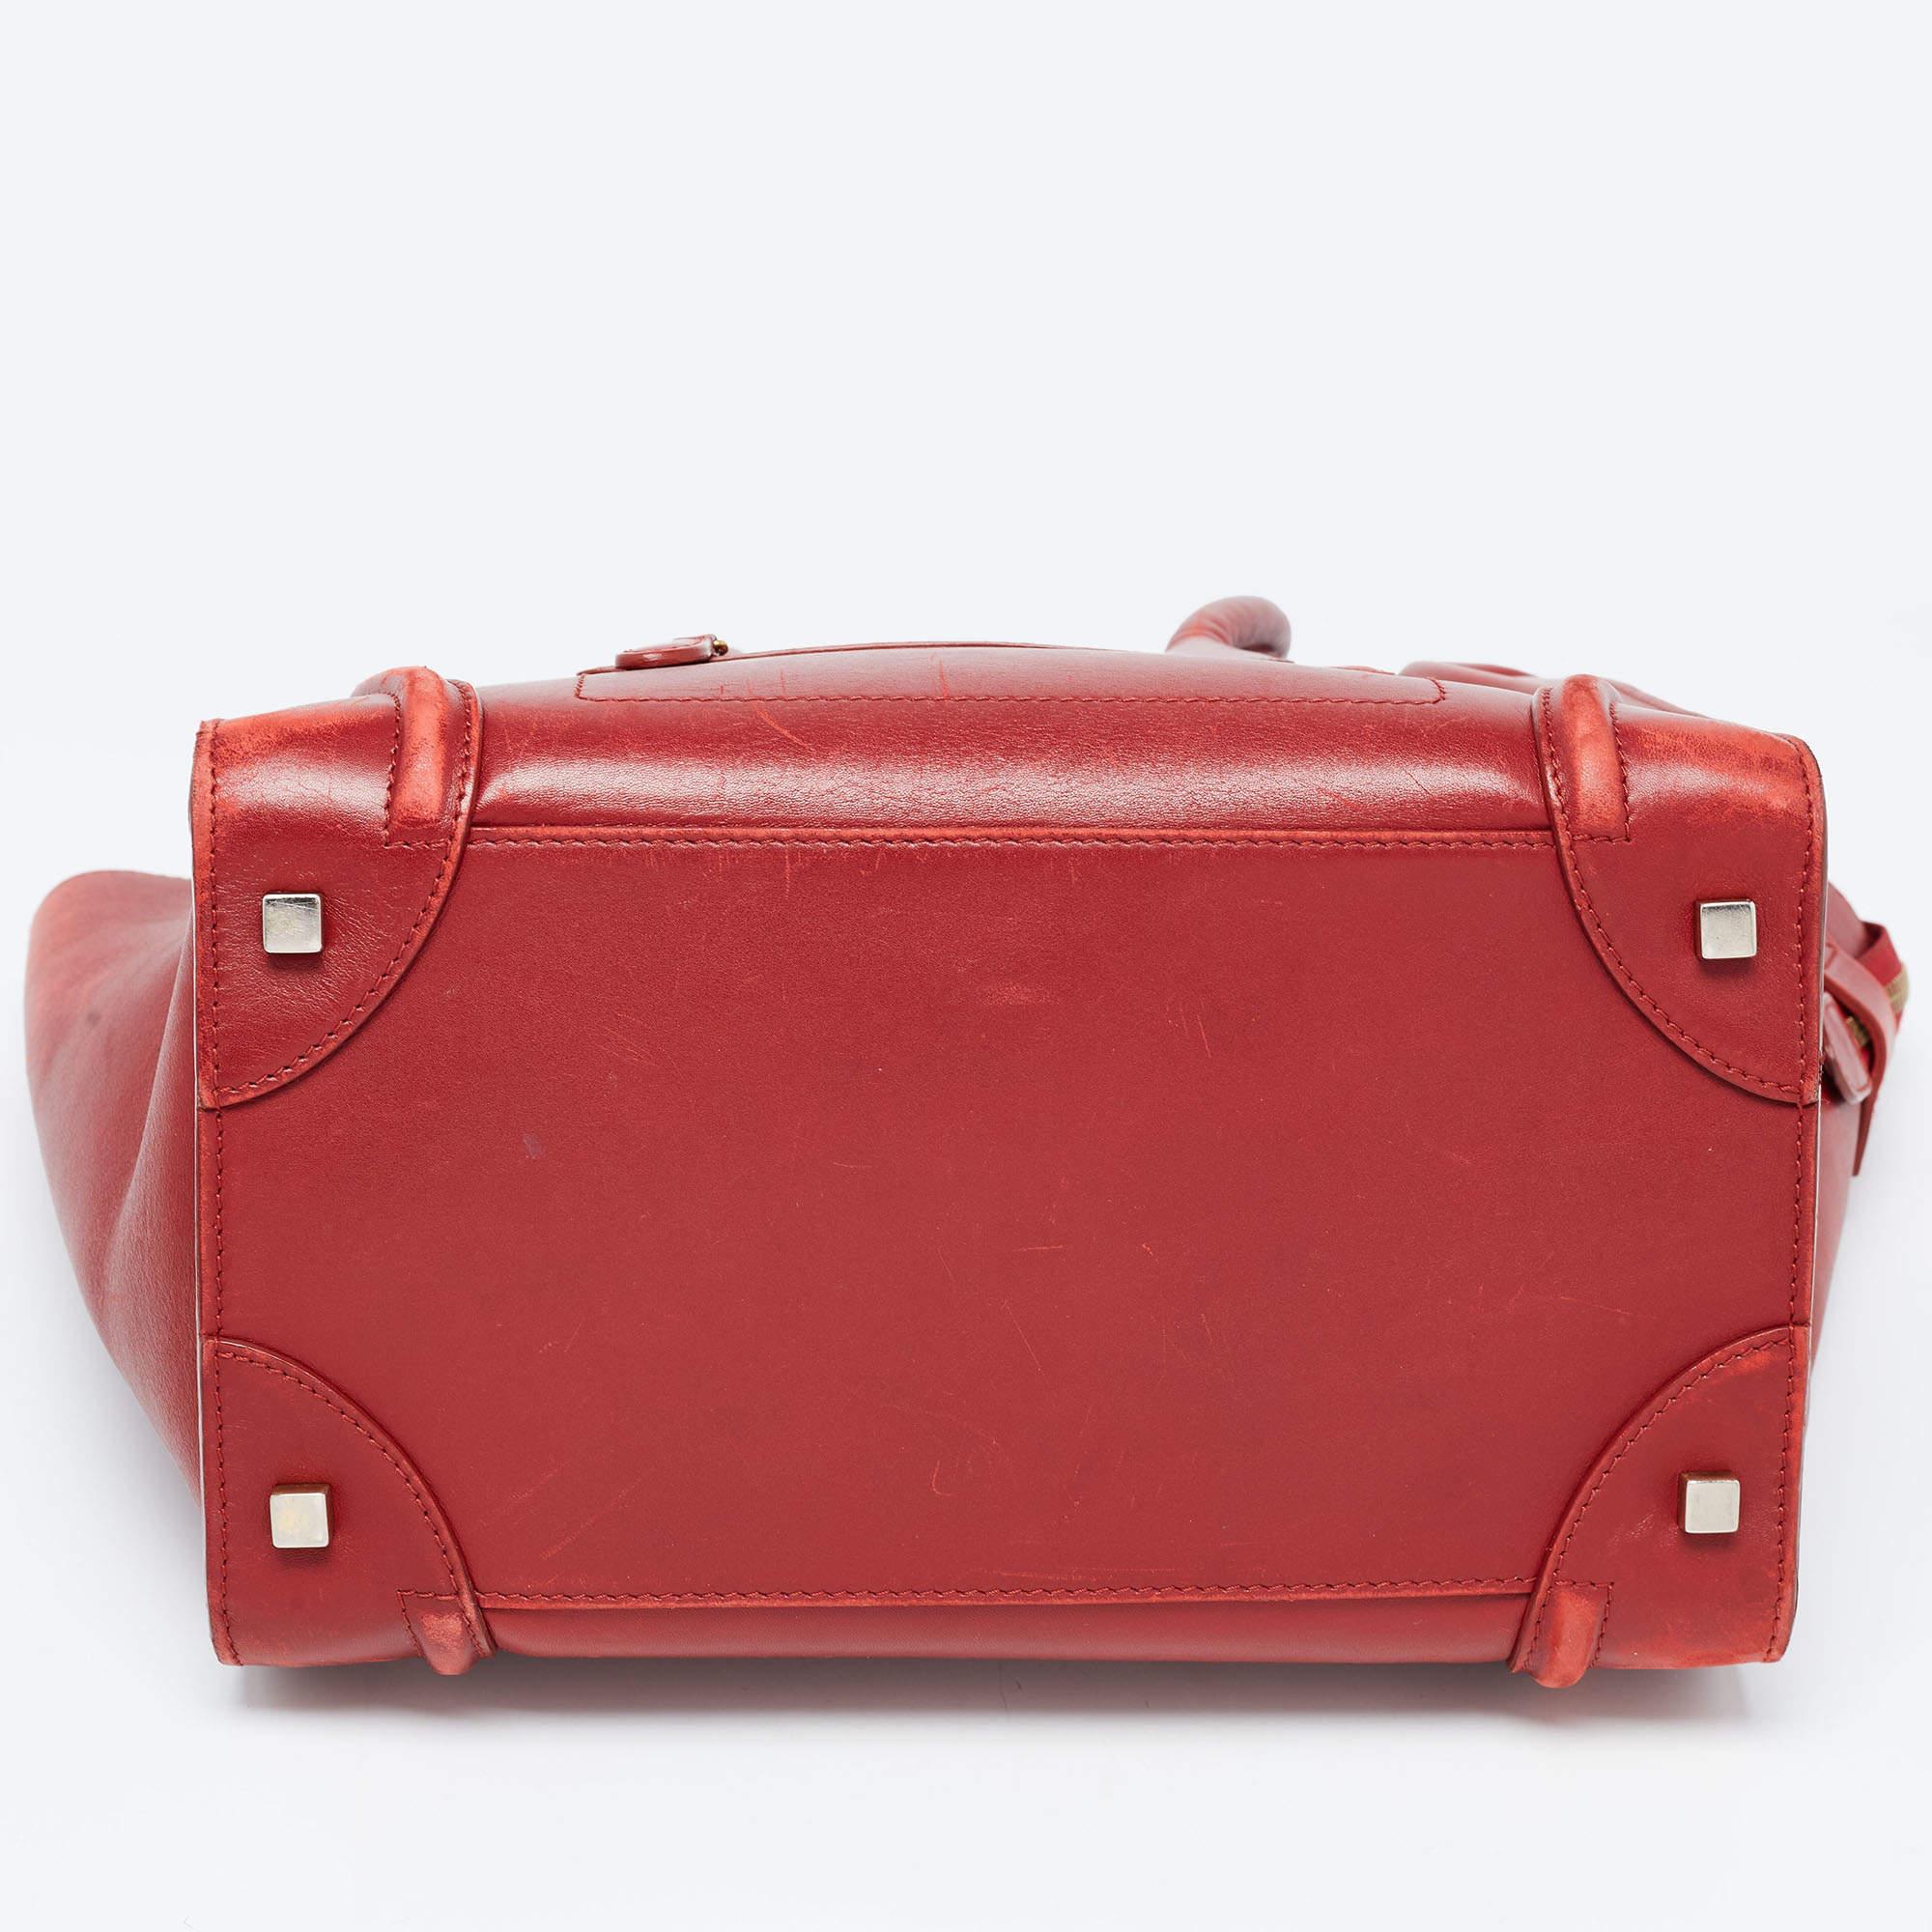 Celine Red Leather Mini Luggage Tote 1